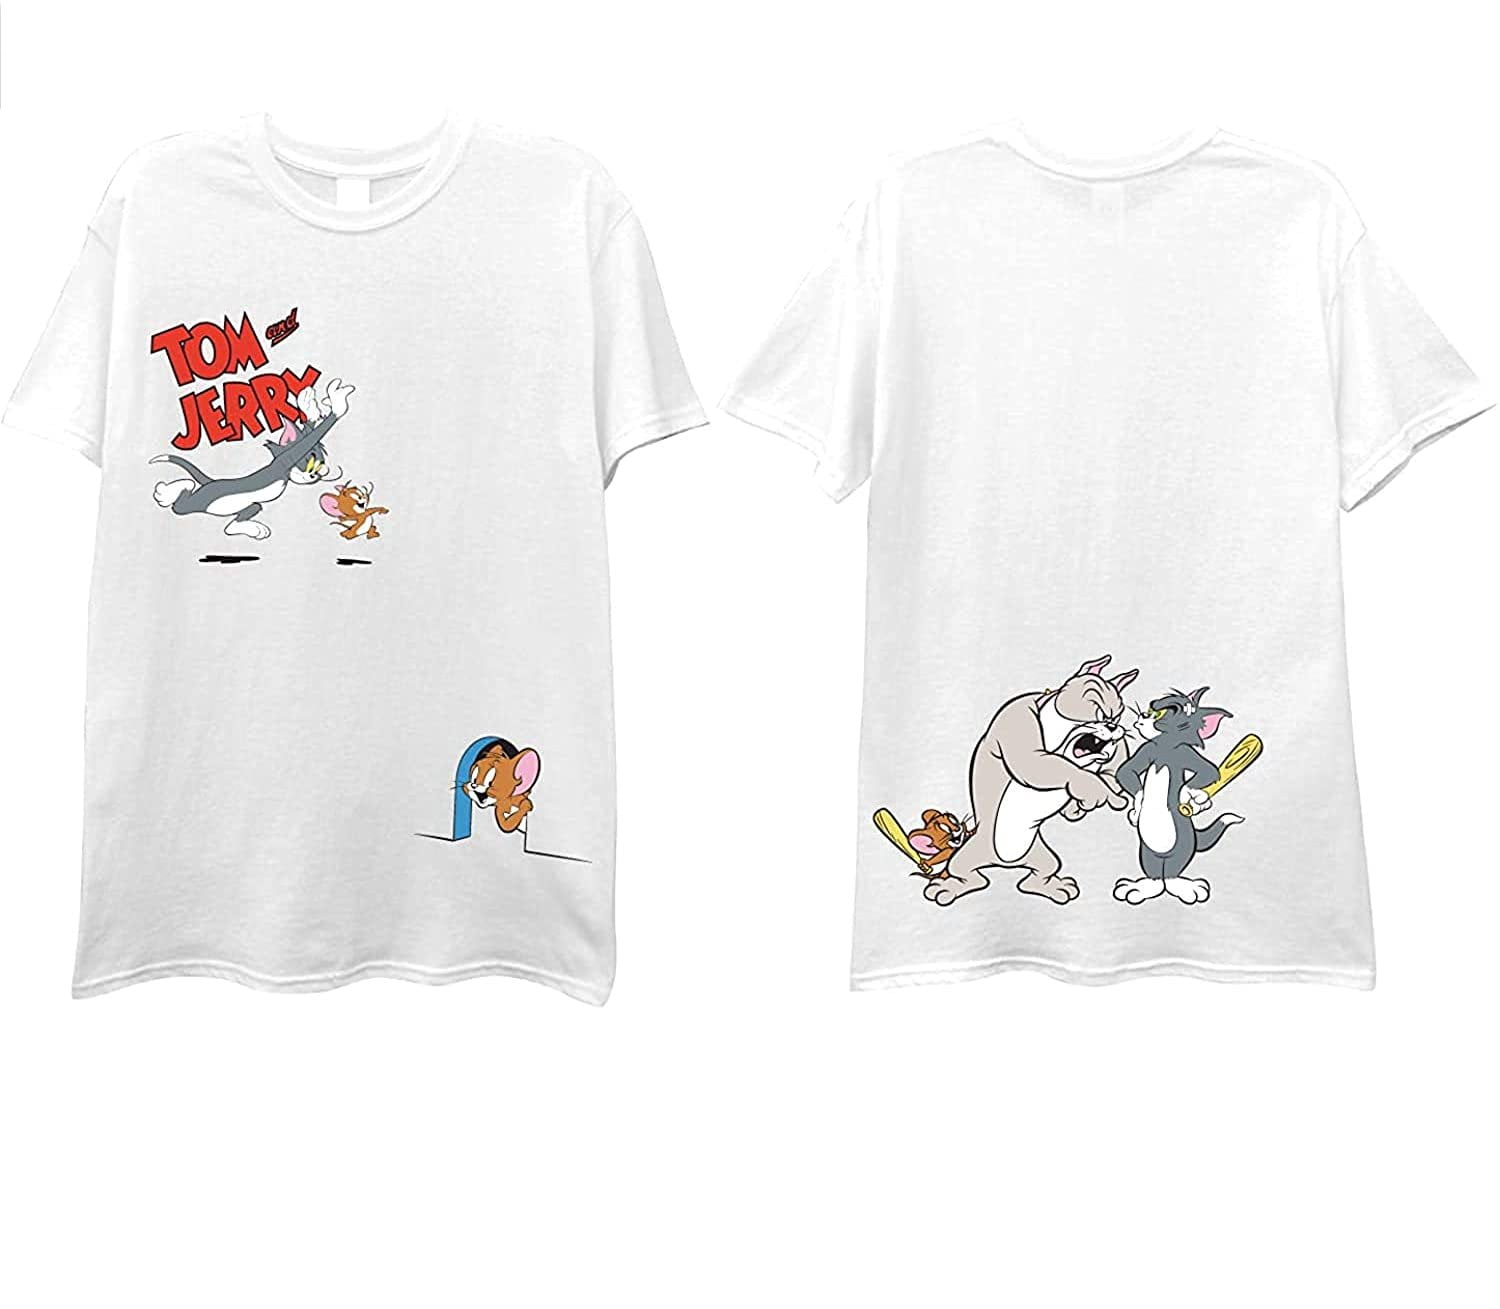 Mens Tom & Jerry Battle T-Shirt Chase Hanna-Barbera - Classic Shirt Tee Vintage Cartoon 